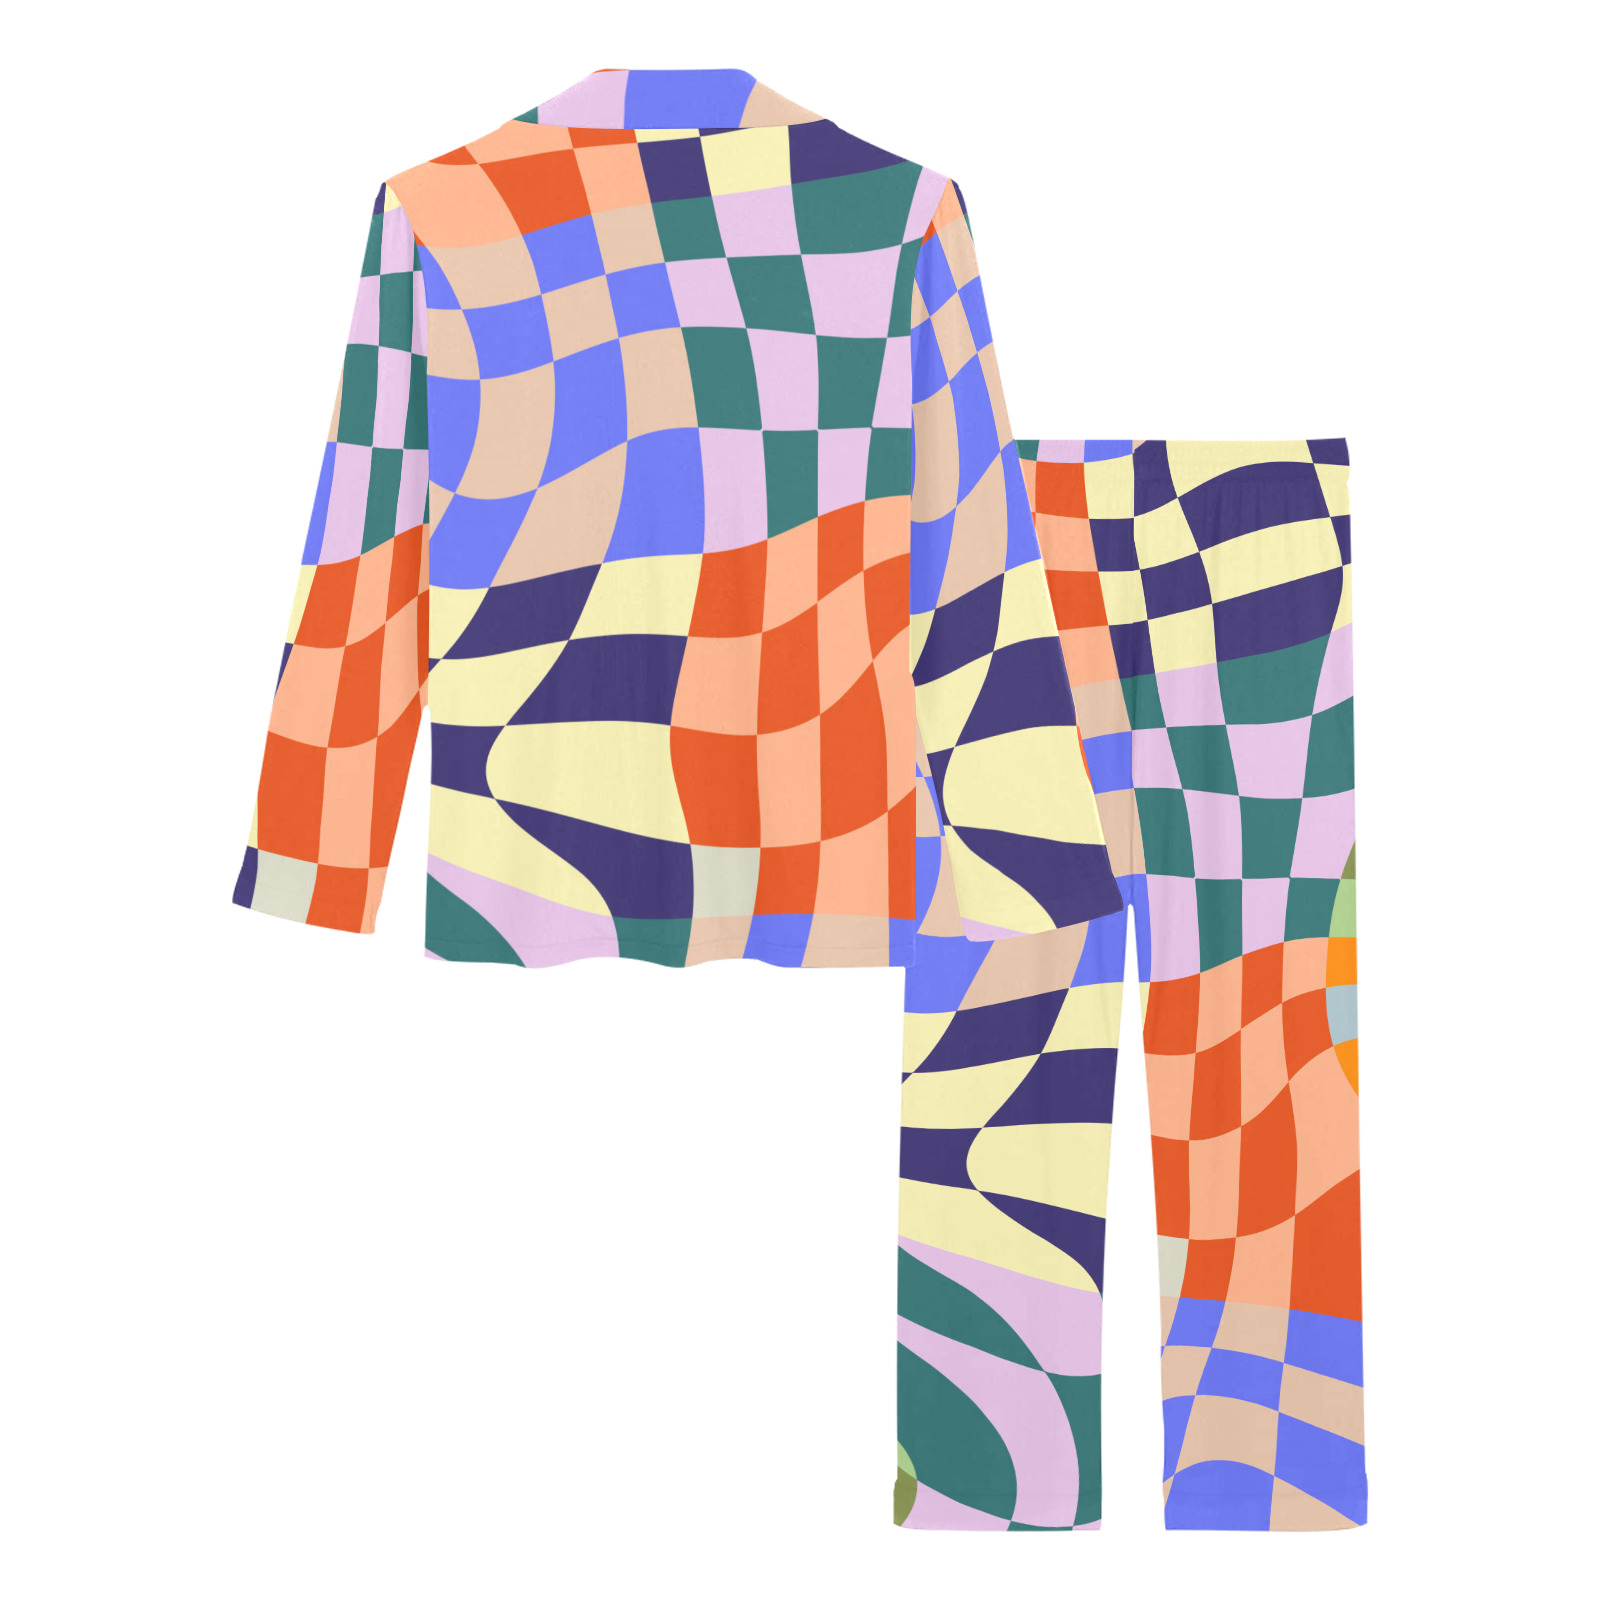 Wavy Groovy Geometric Checkered Retro Abstract Mosaic Pixels Women's Long Pajama Set